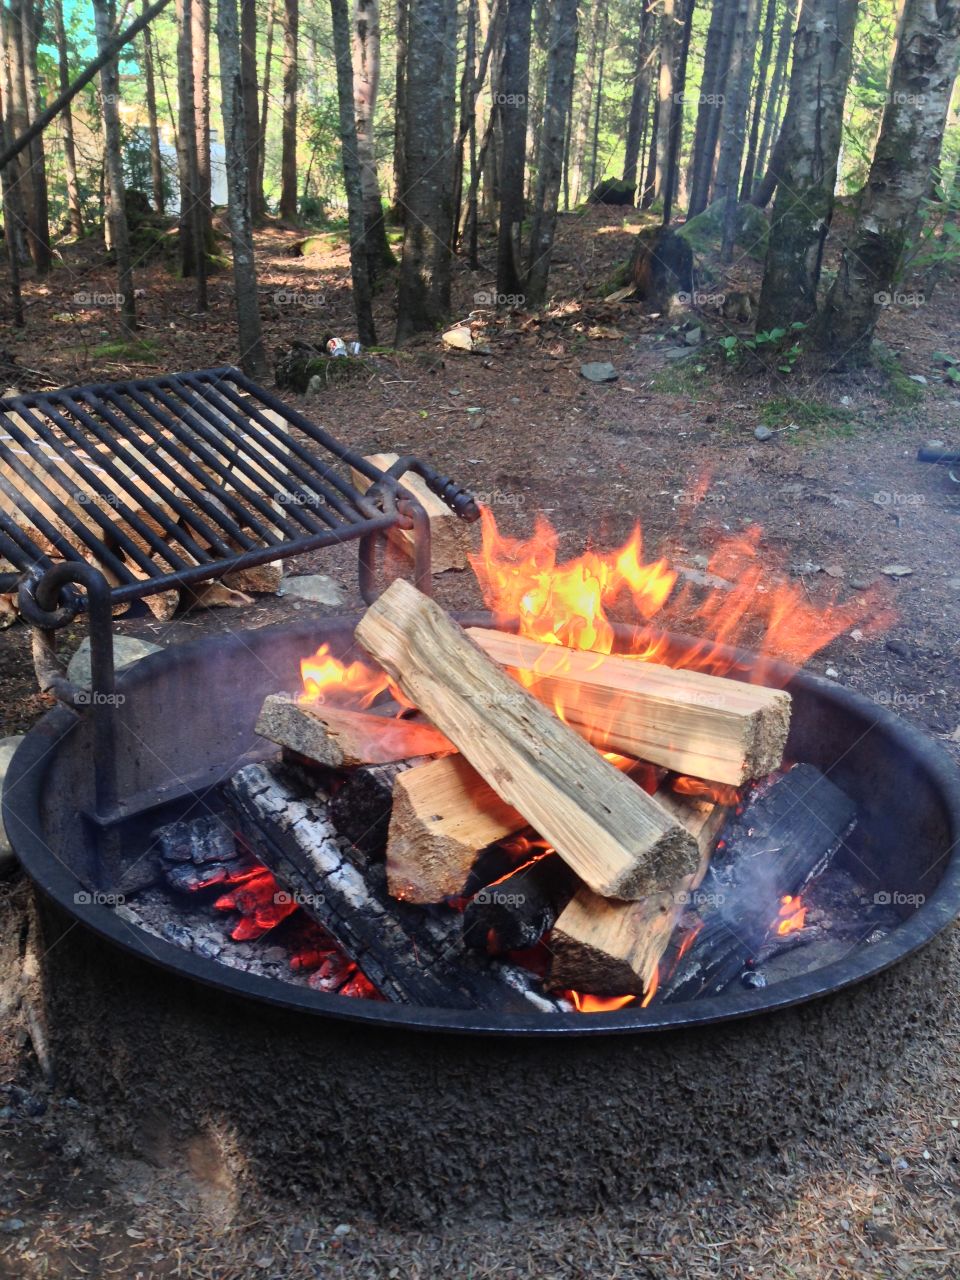 Campfire. Fire pit set ablaze . Warm toasty fire. 